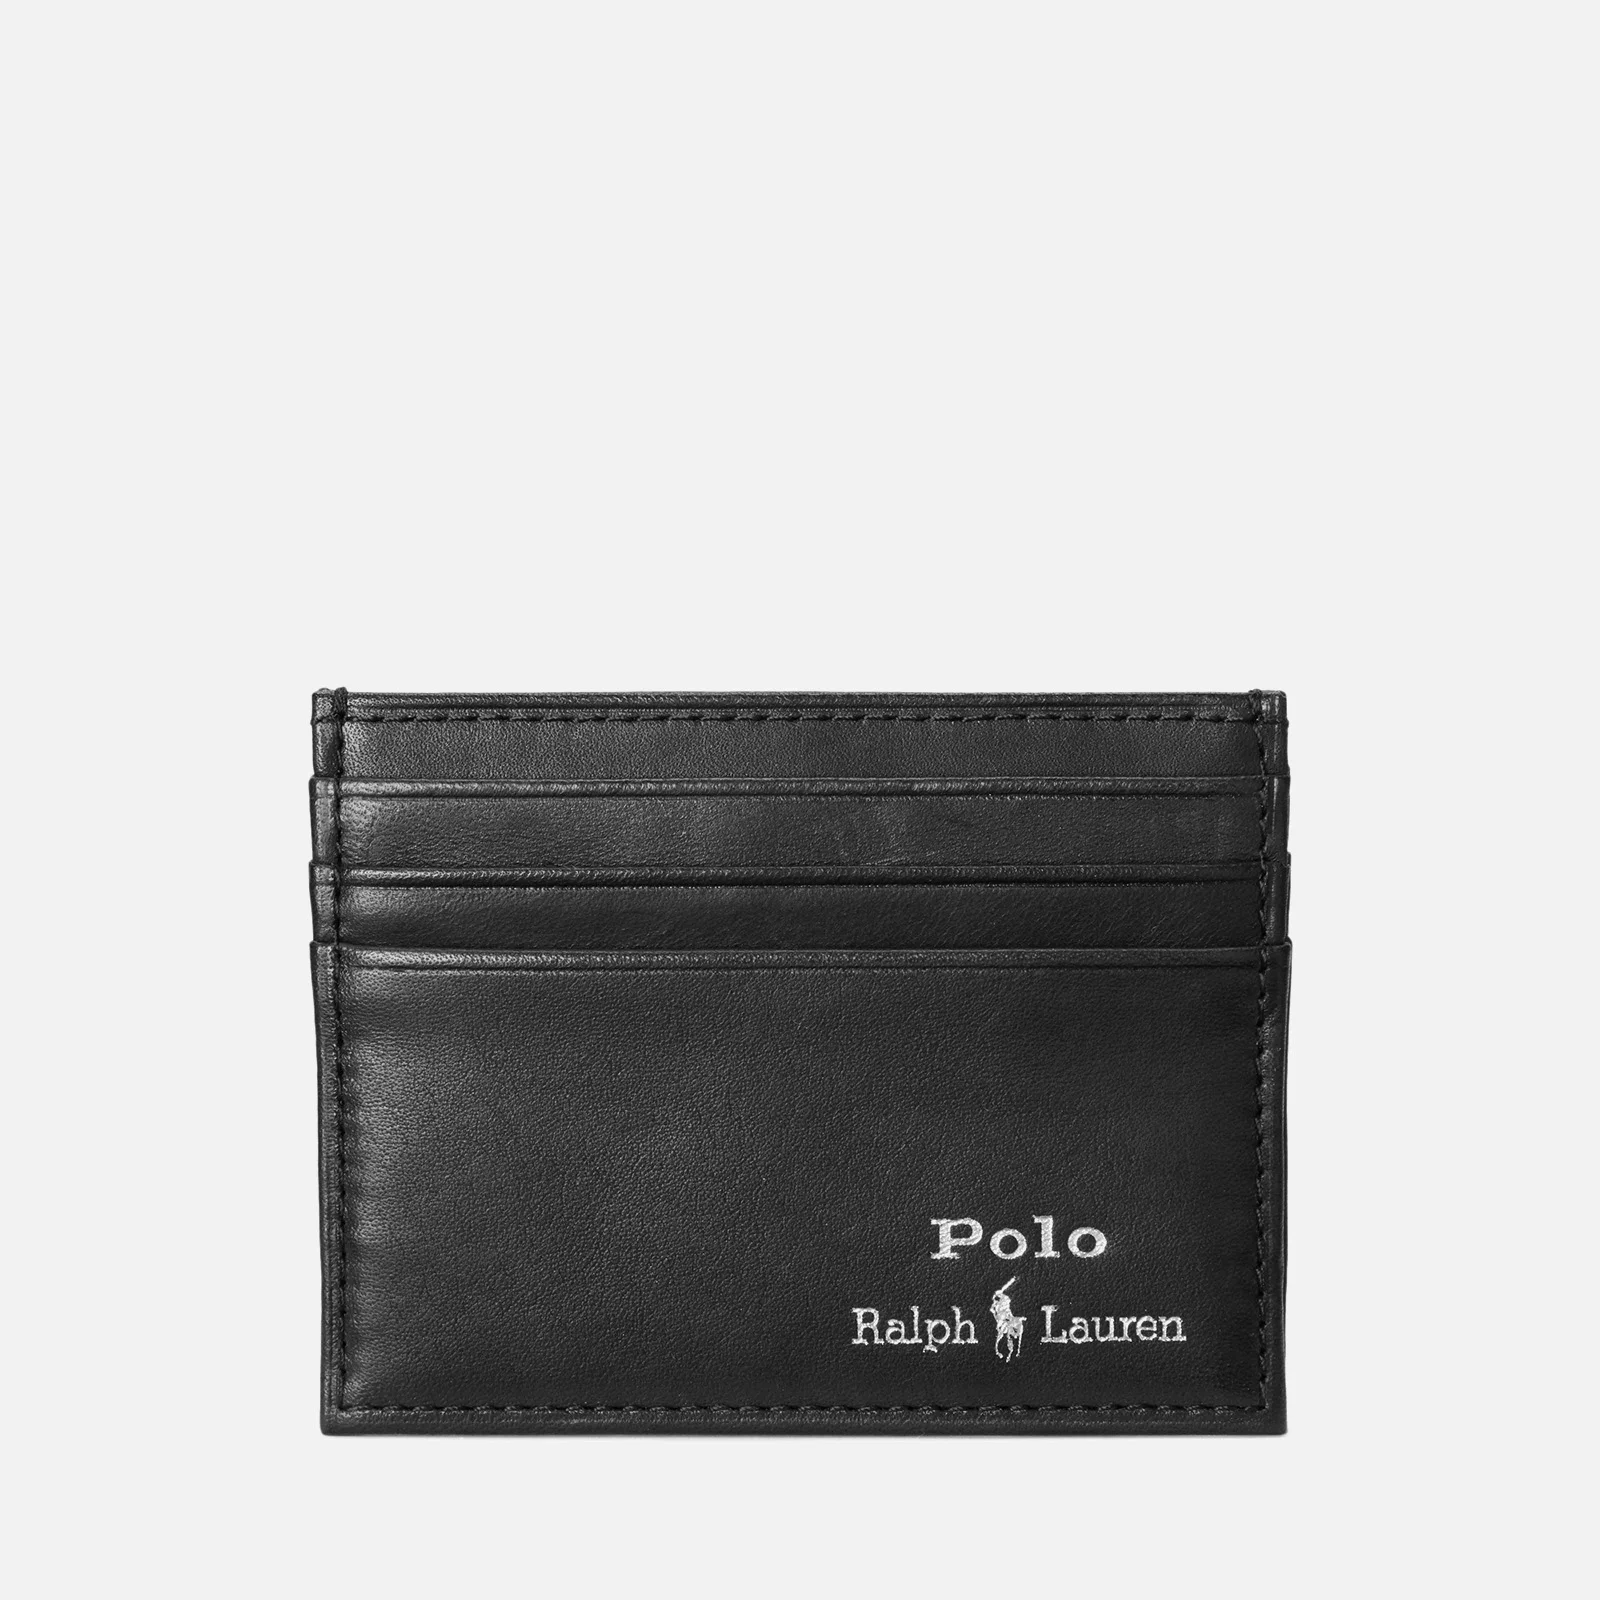 Polo Ralph Lauren Men's Smooth Leather Gold Foil Cardholder - Black Image 1